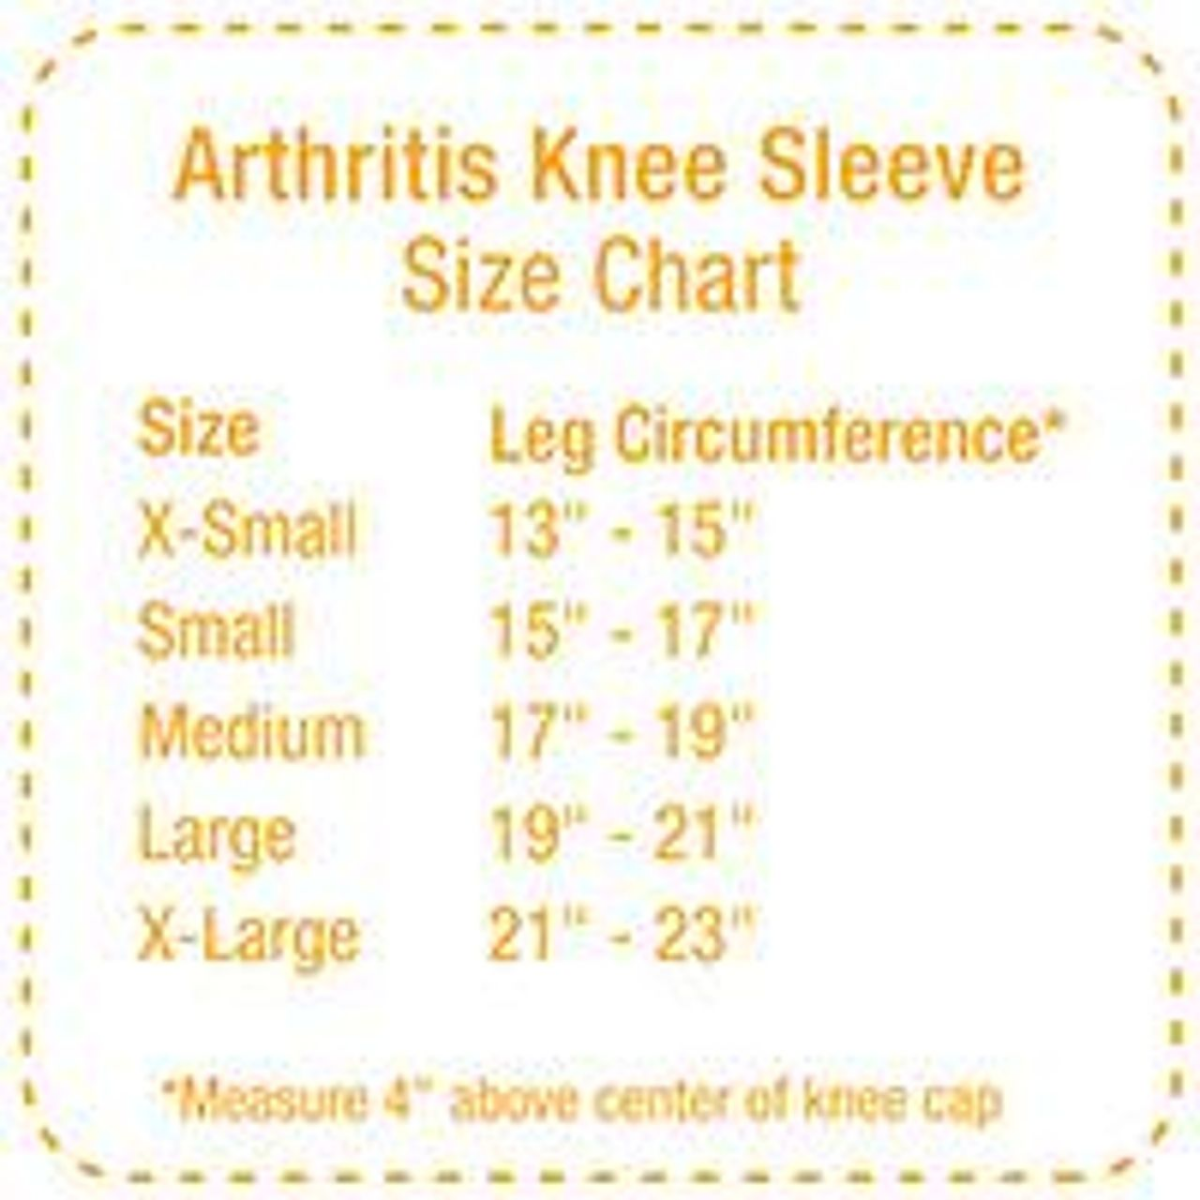 IMAK® arthritis knee sleeve